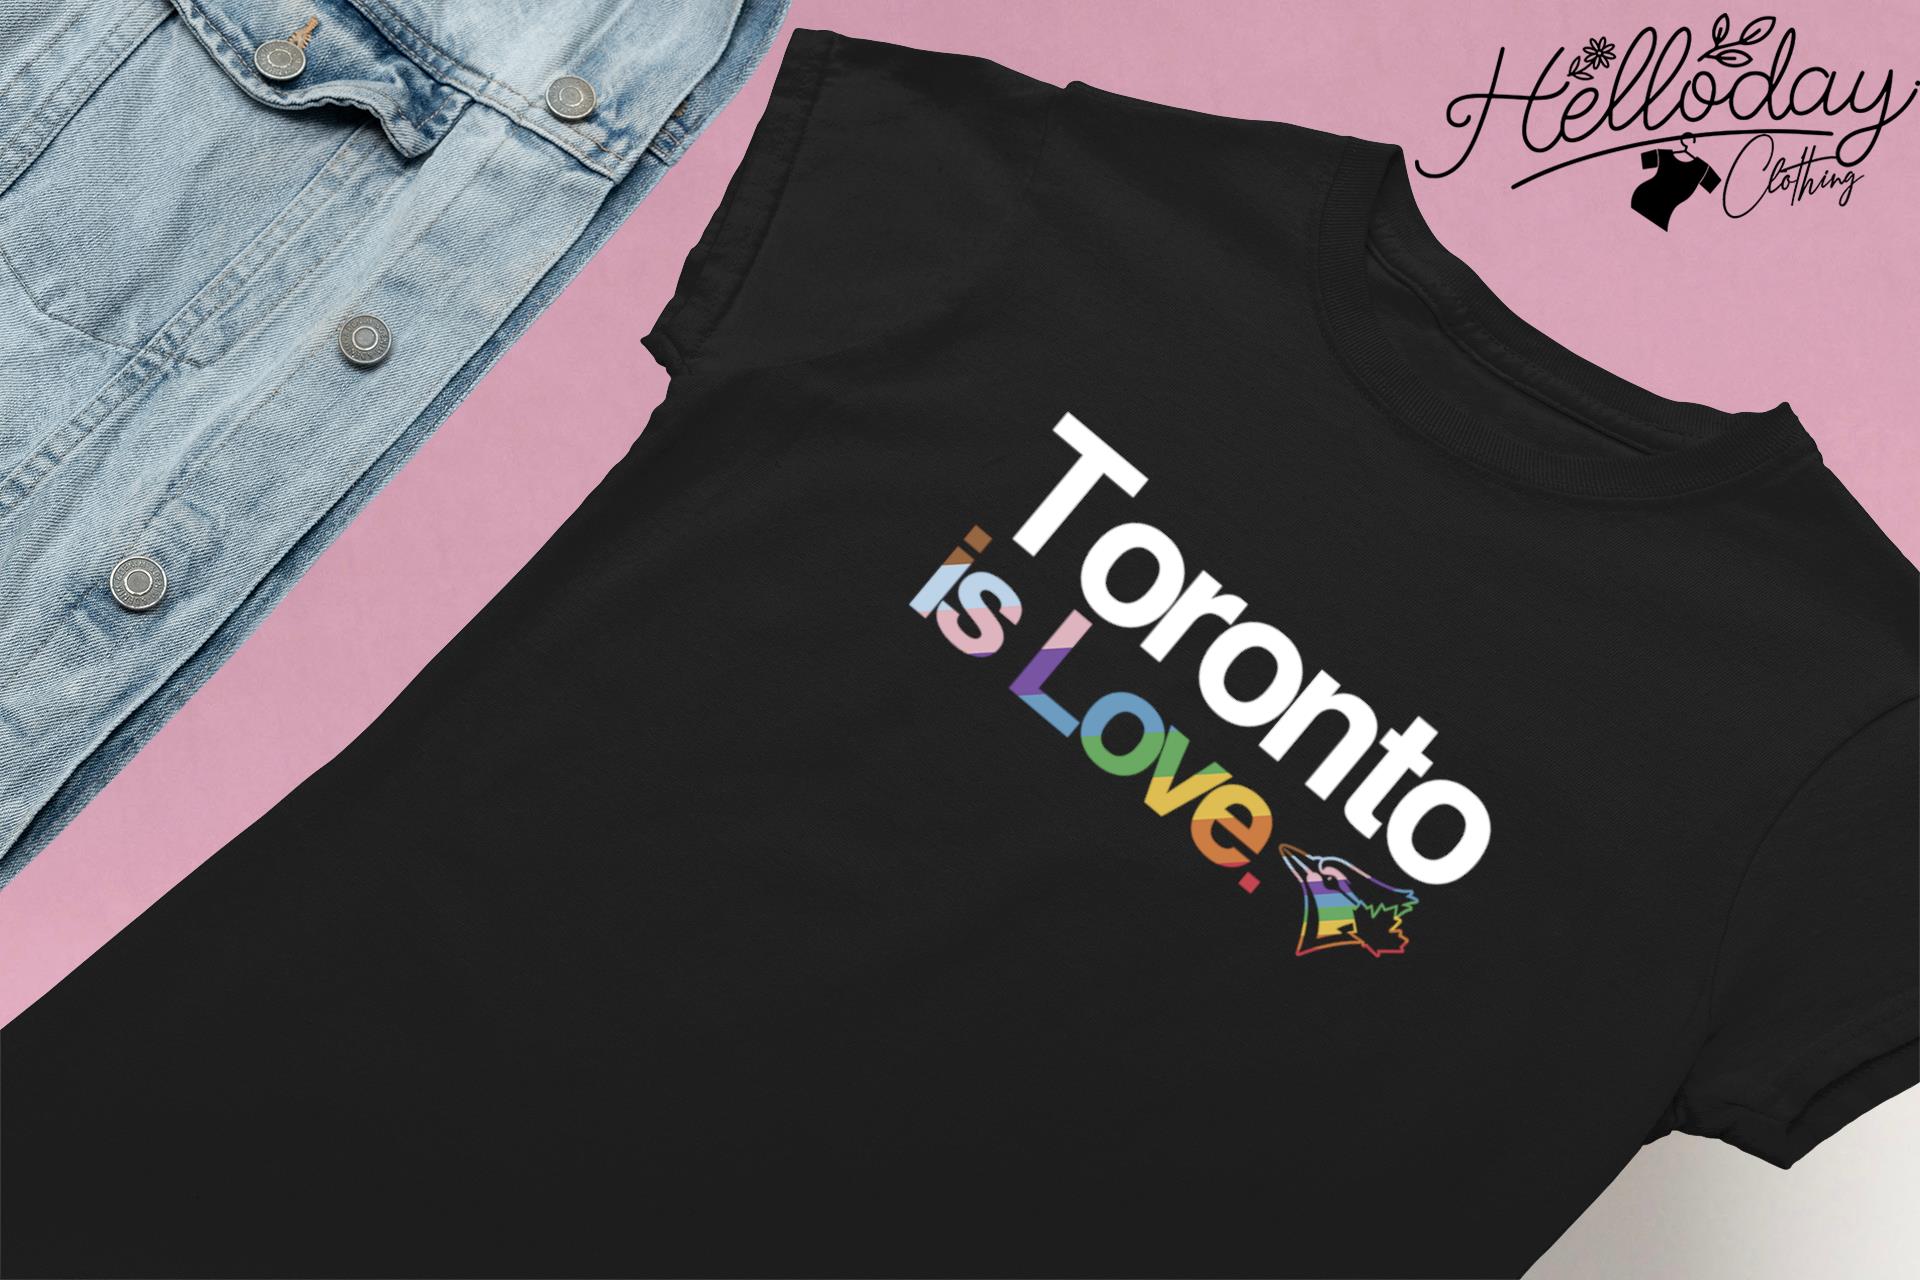 Toronto Blue Jays MLB is love LGBT pride shirt, hoodie, sweater